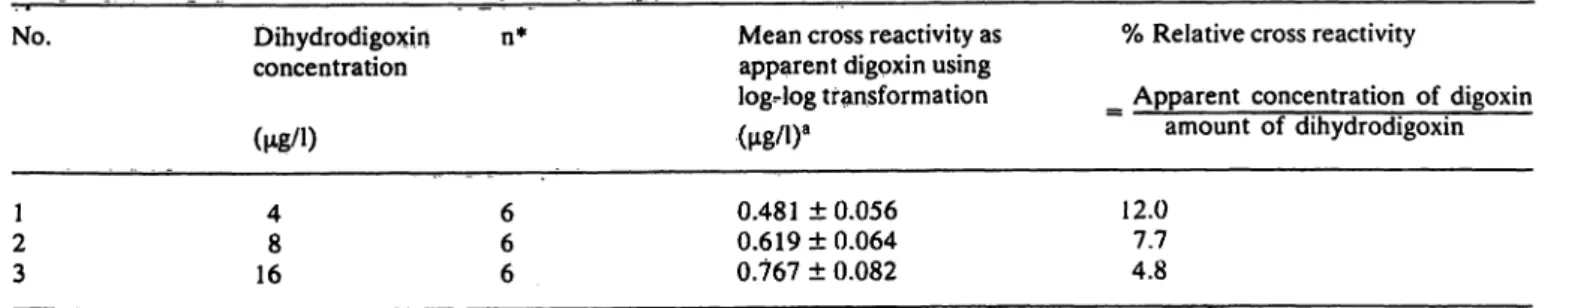 Tab. 4. Relative cross reactivity of dihydrodigoxin with digoxin antibody complex.